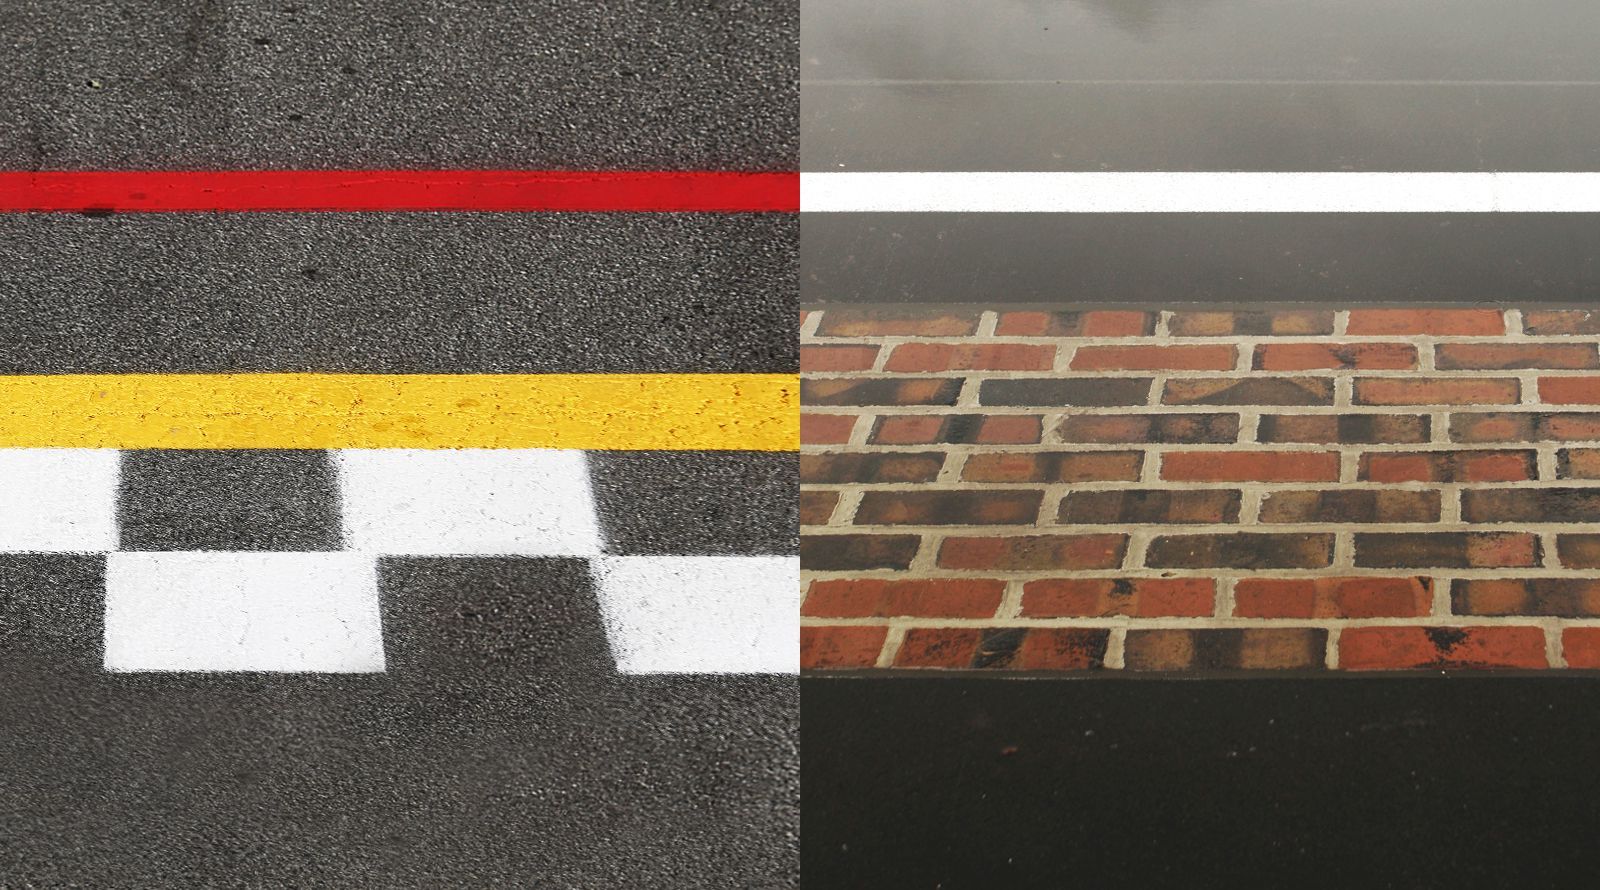 The Monaco start/finish line (L) and the IMS Yard of Bricks (R)